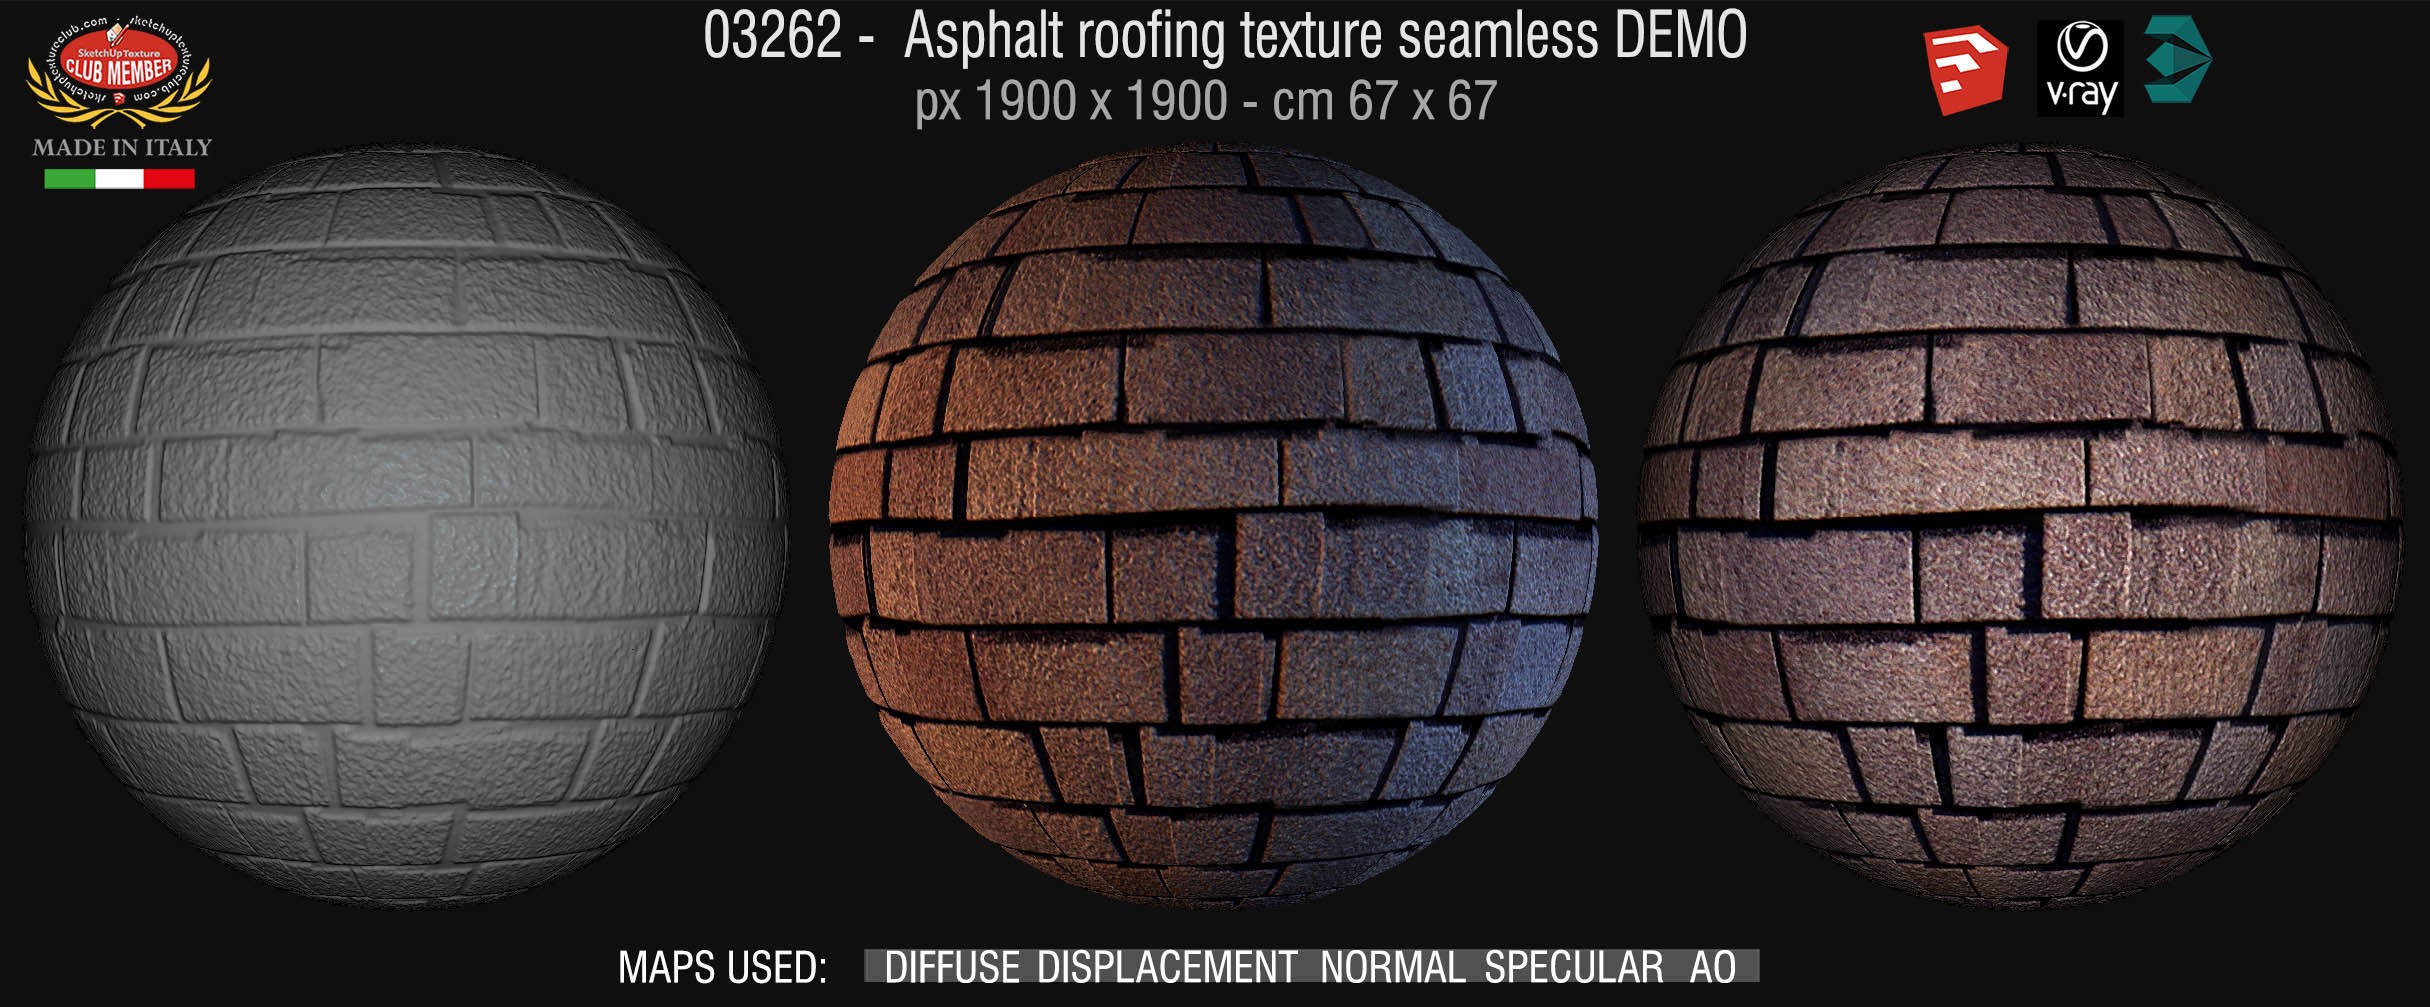 03262 Asphalt roofing texture seamless + maps DEMO